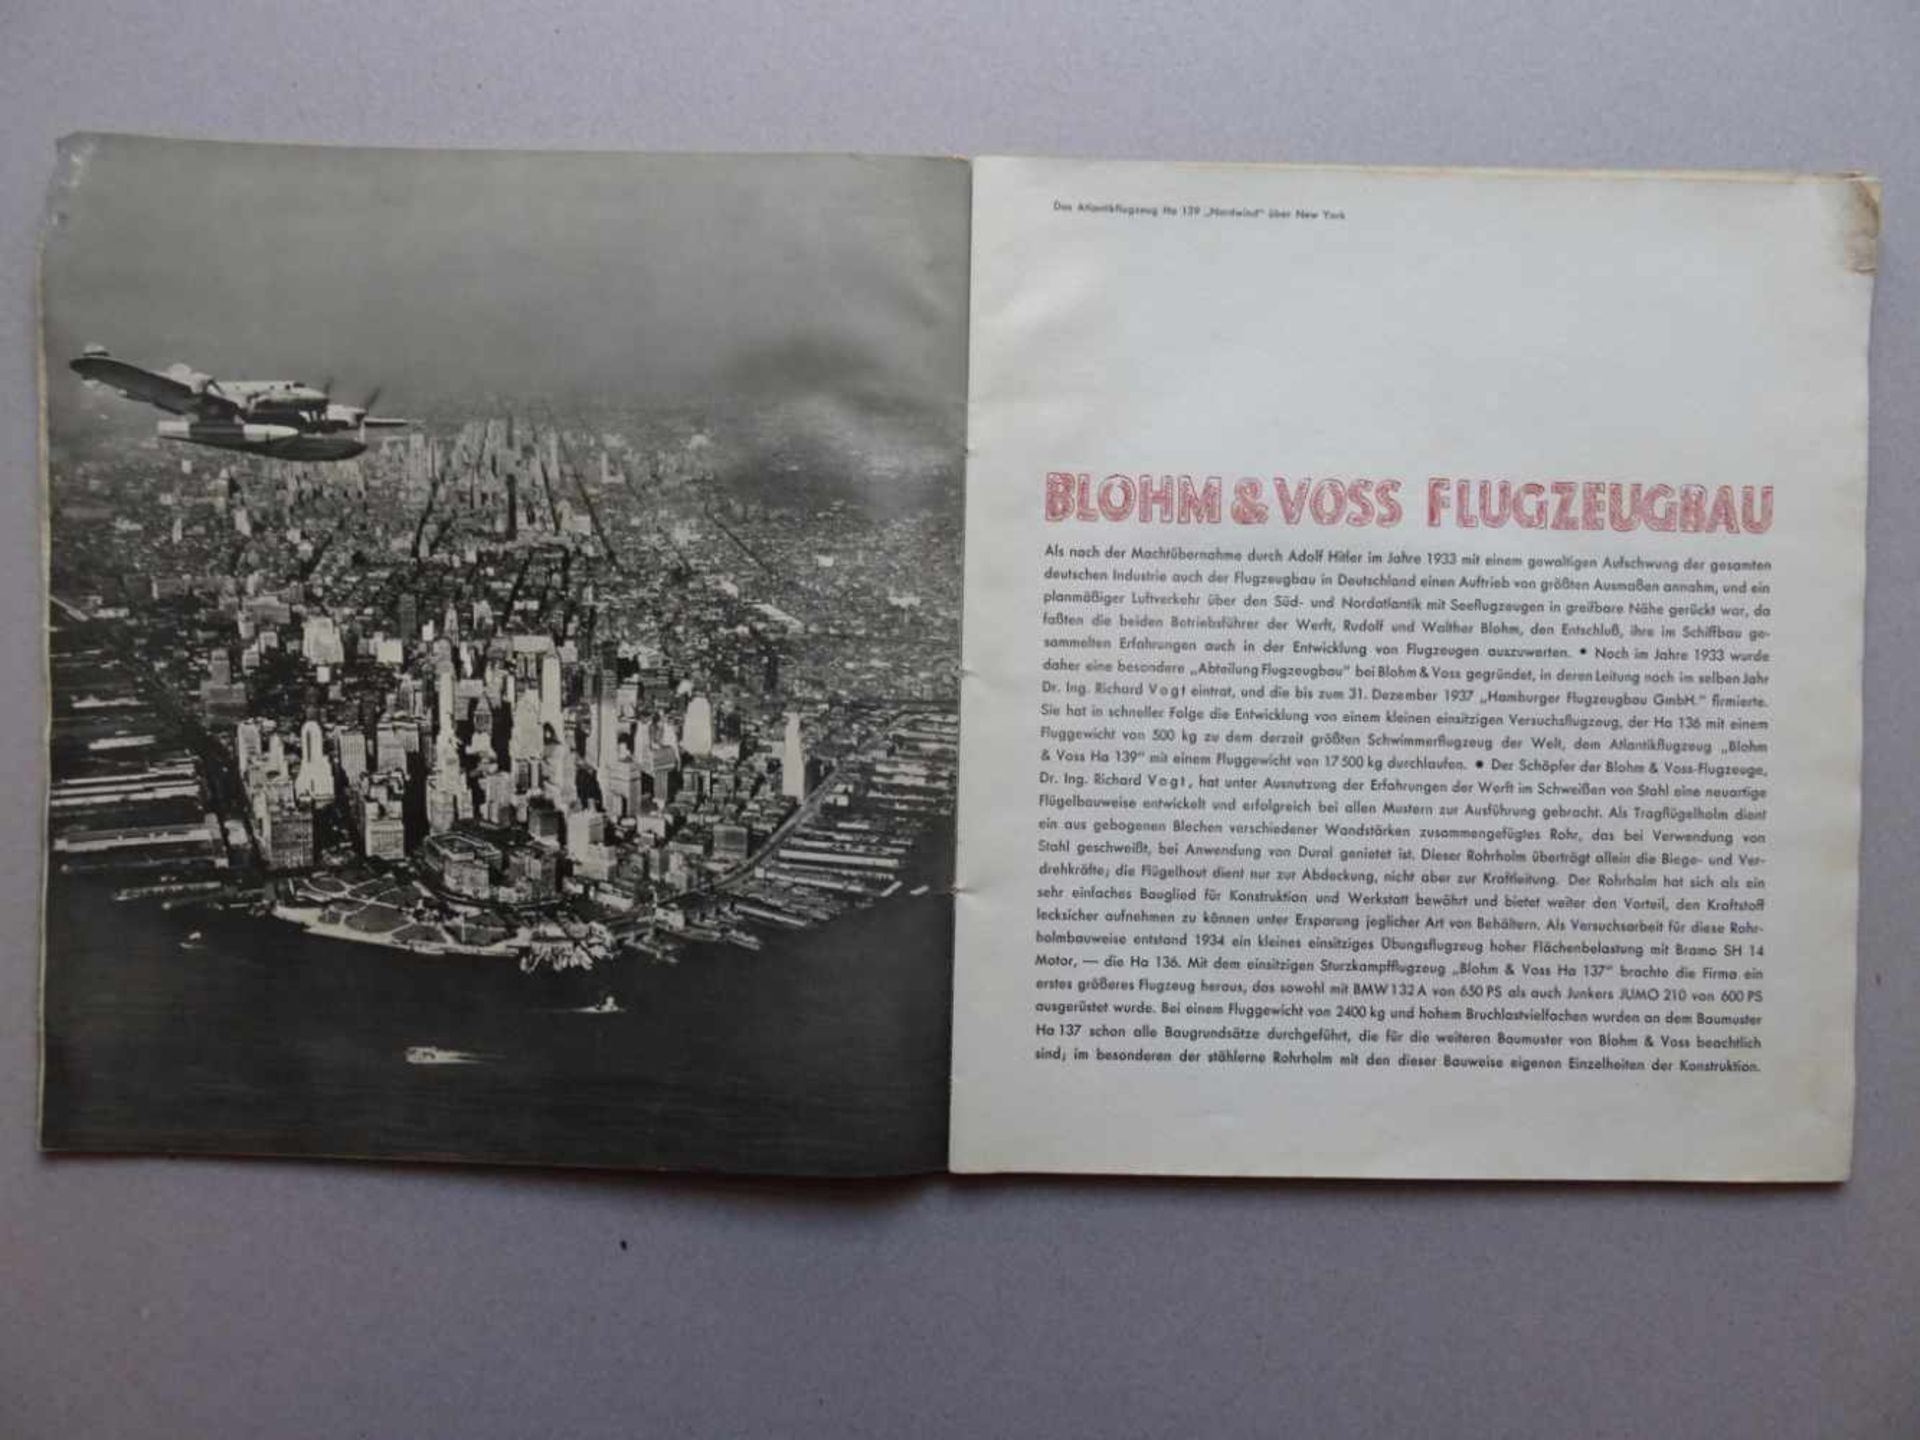 Luftfahrt.- Blohm & Voss.Hamburg, 1939. 9 Bll. Mit zahlr. Fotografien u. 1 doppelblattgr. Karte. 4°.